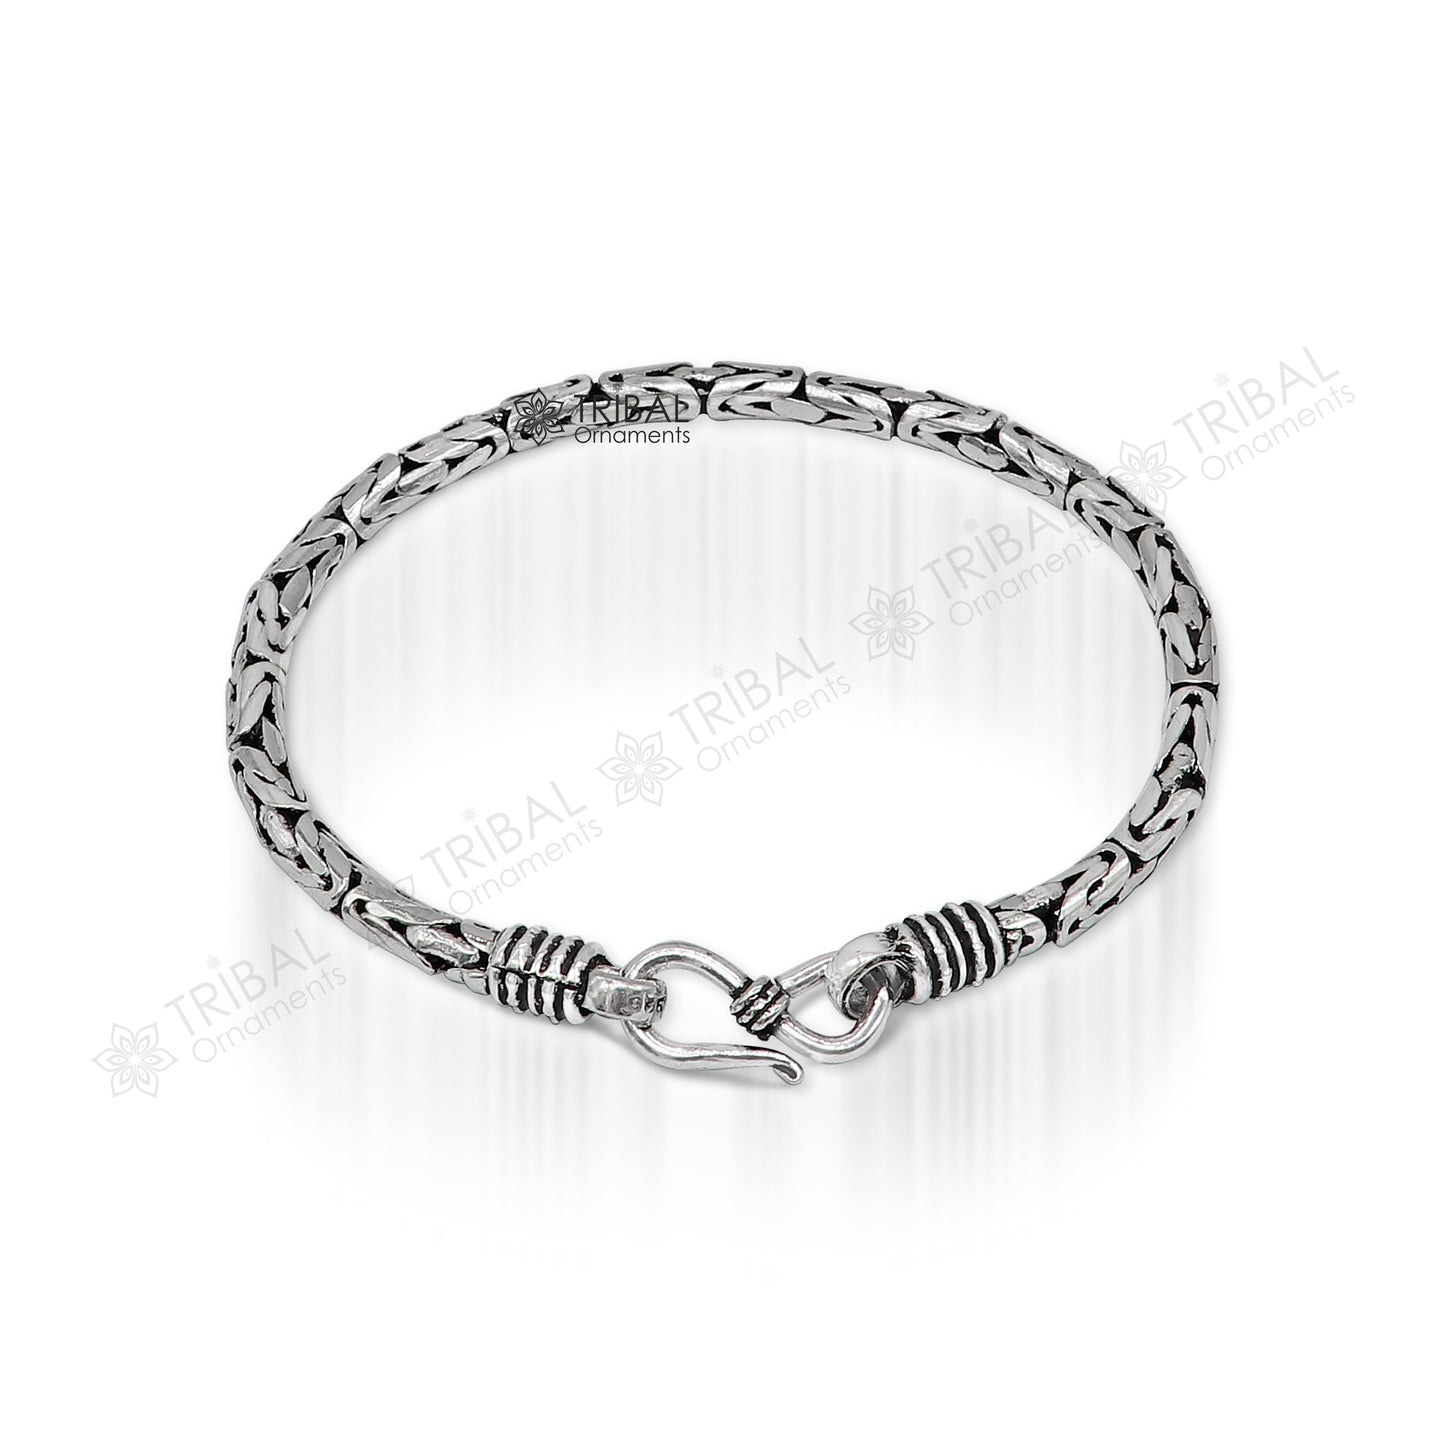 3.5mm 6.5" to 8.5" Unique byzantine design 925 Sterling silver handmade chain bracelet flexible bracelet unisex jewelry from India  sbr729